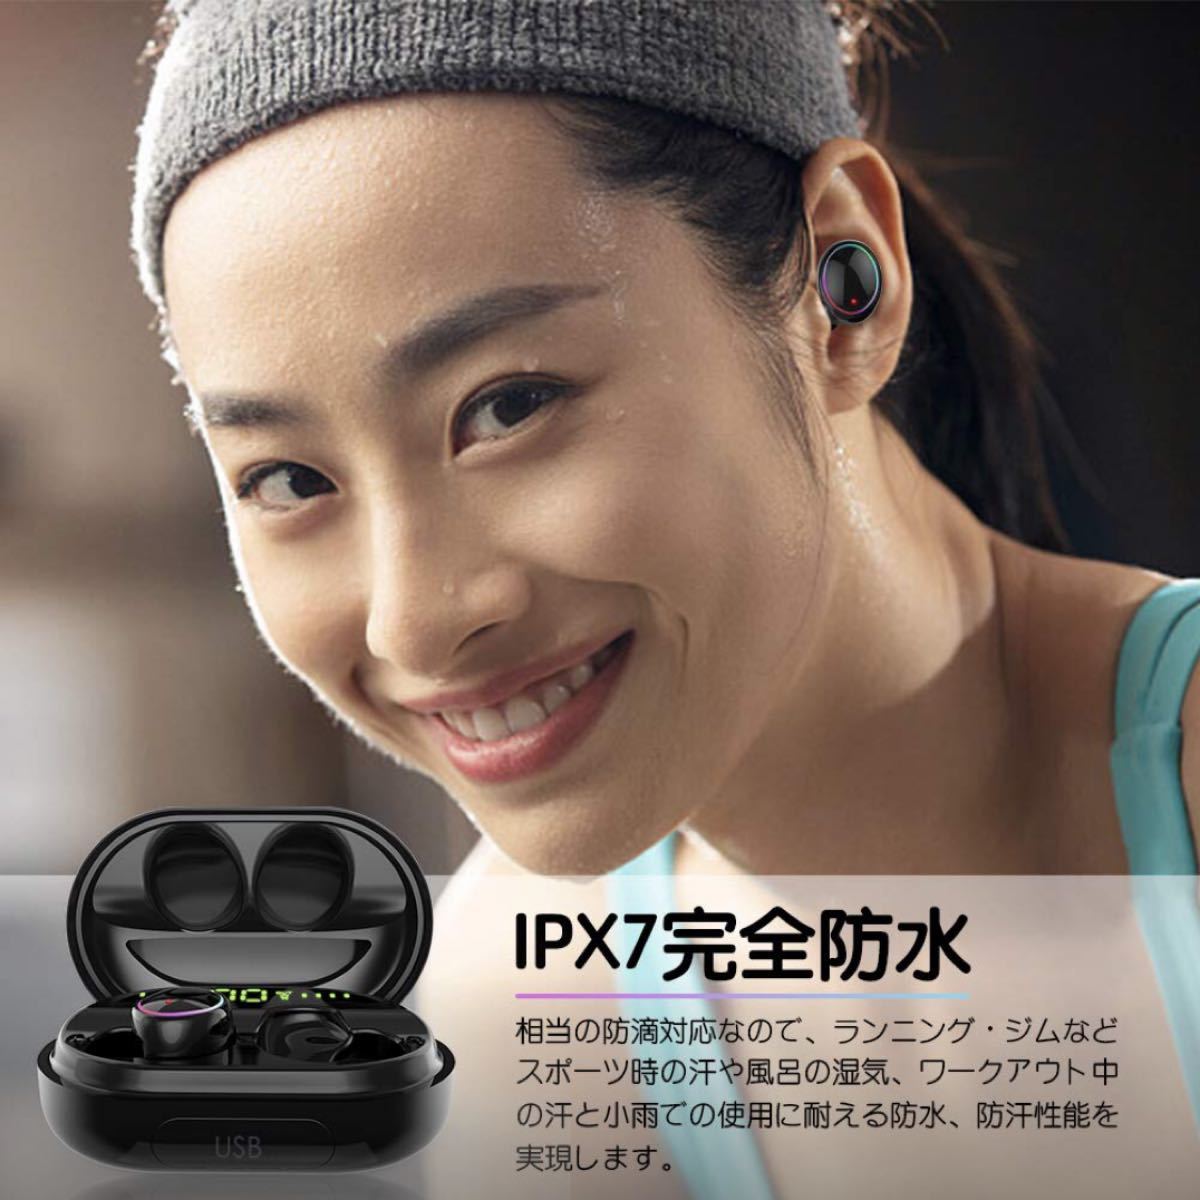 Bluetooth イヤホン ワイヤレス Hi-Fi高音質 6DステレオサウンドEDR搭載 完全IPX7防水 日本語音声通知